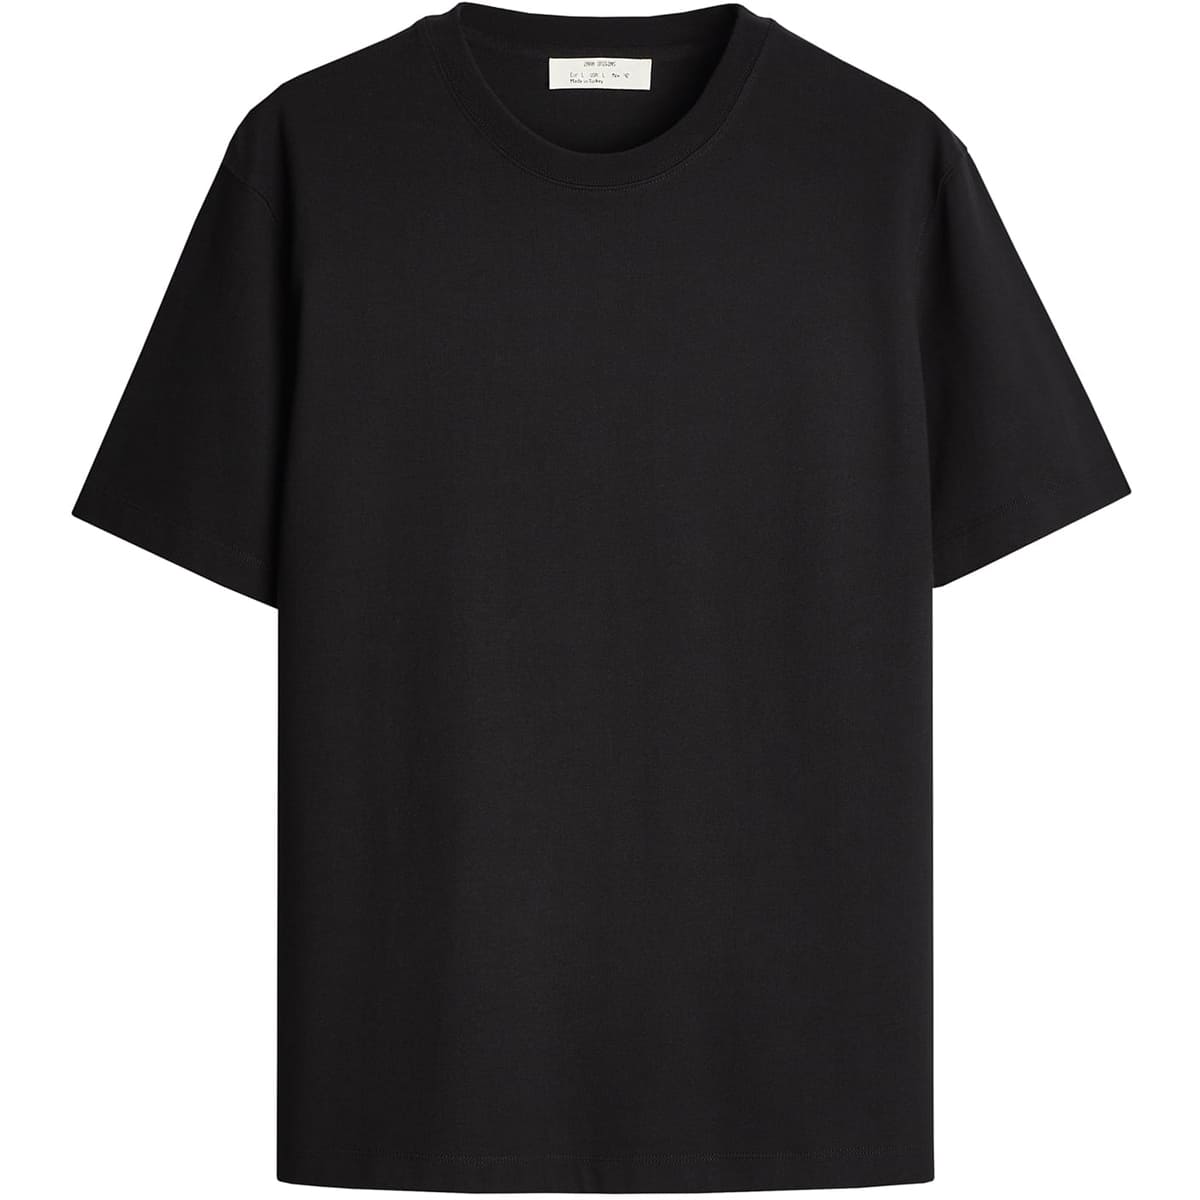 Футболка Zara Short Sleeve Heavy Weight, черный футболка zara short sleeve черный